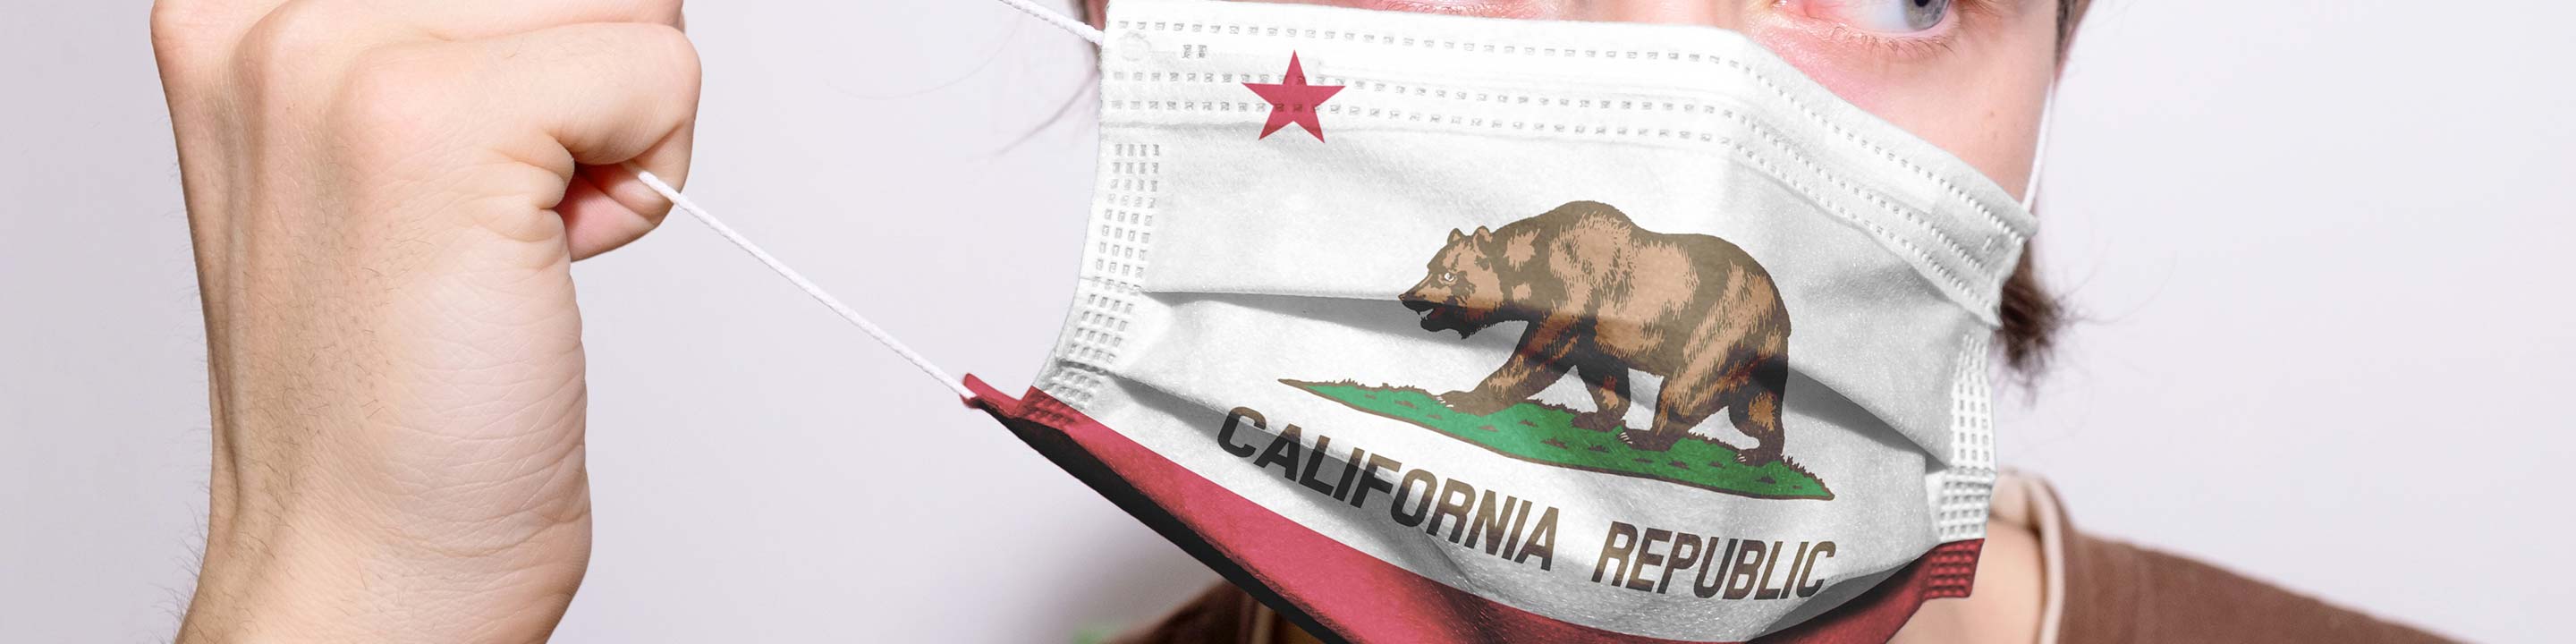 PPP Loan Tax Implications - California